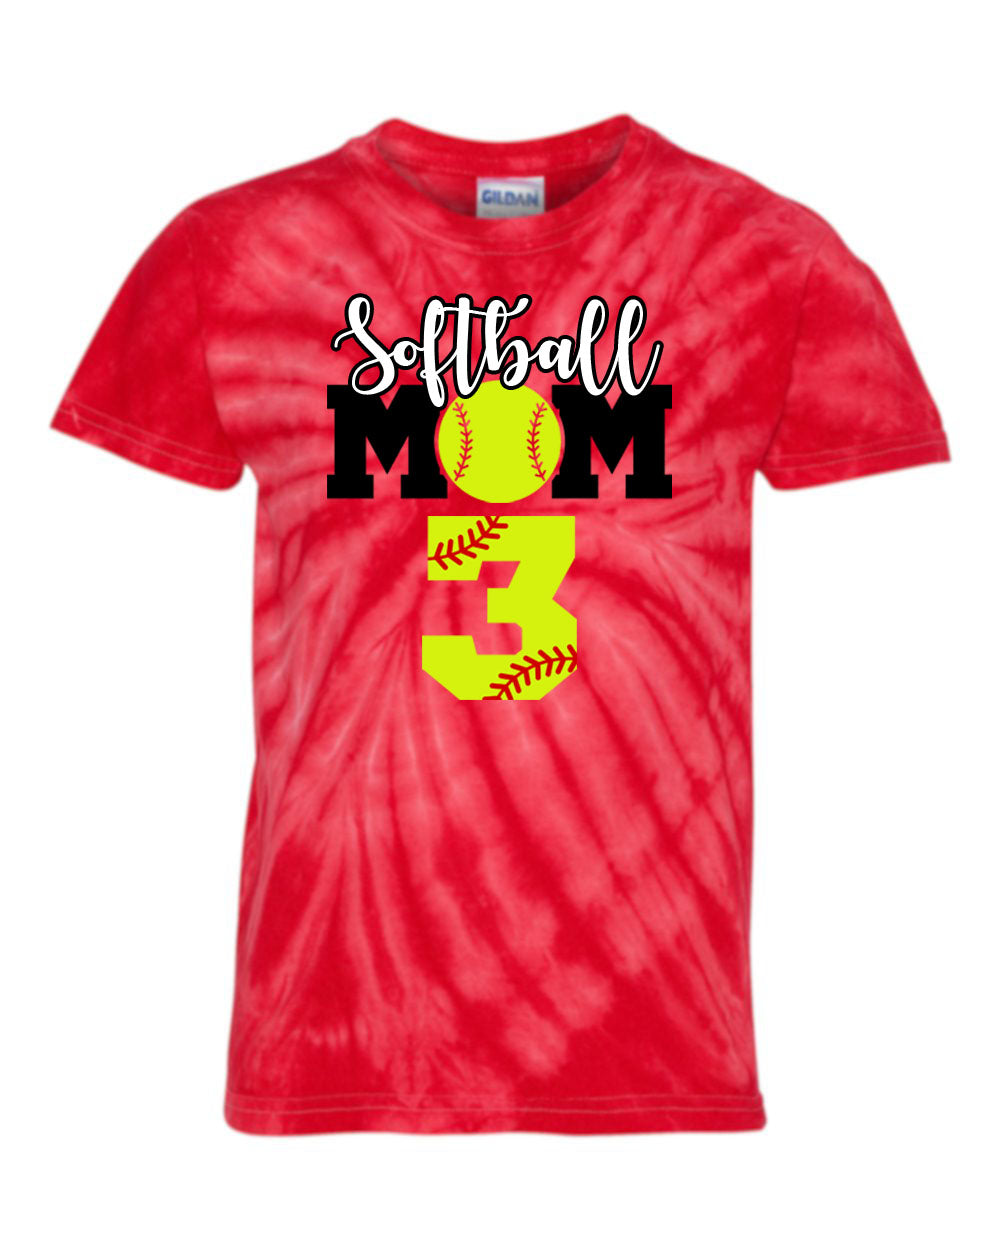 High Point Softball Tie Dye t-shirt Design 6